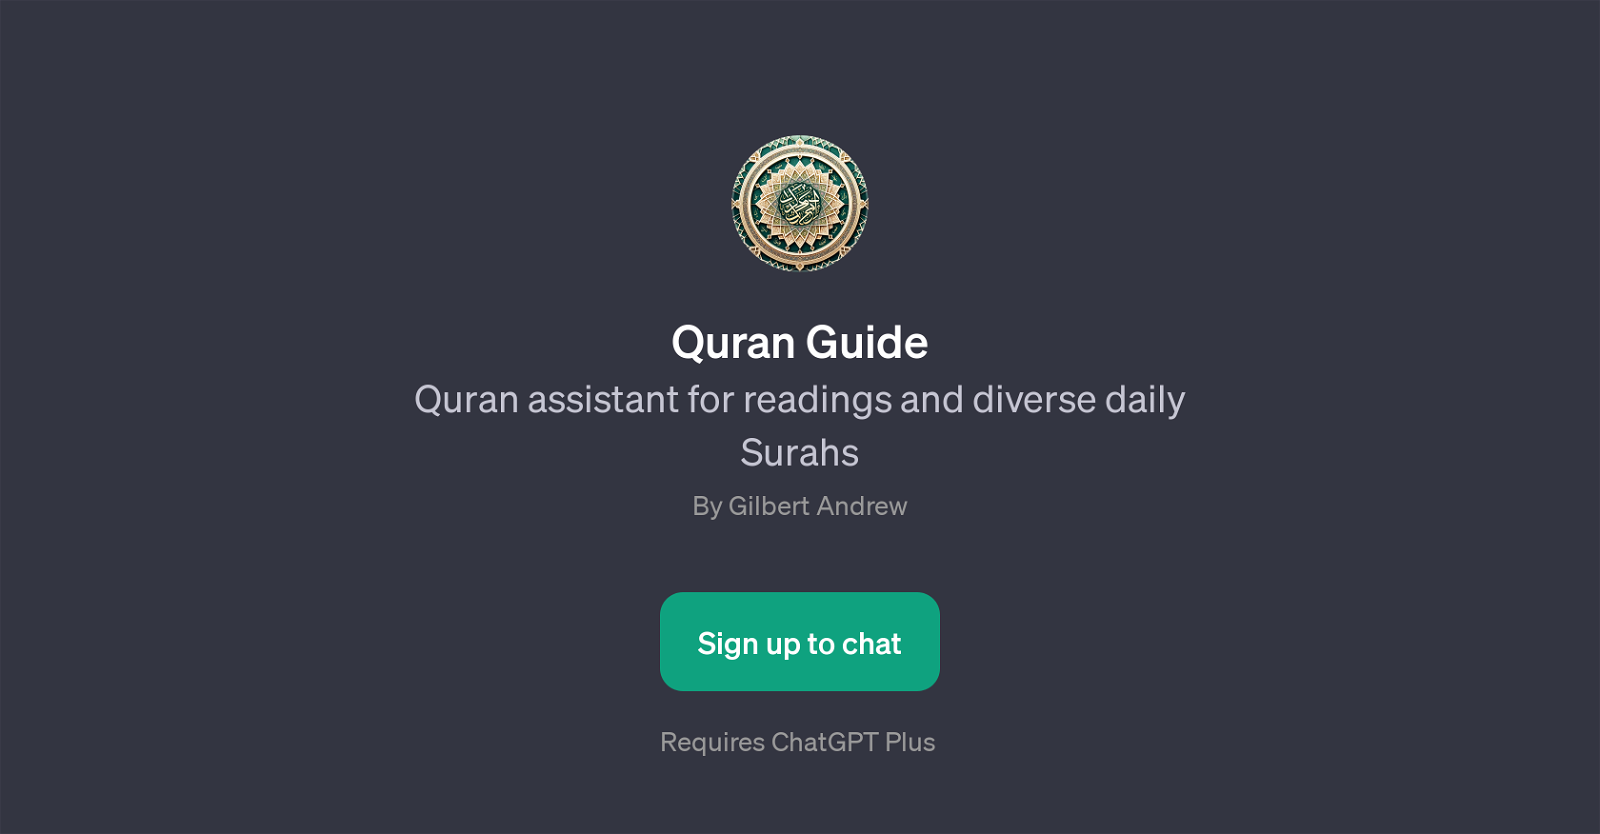 Quran Guide website